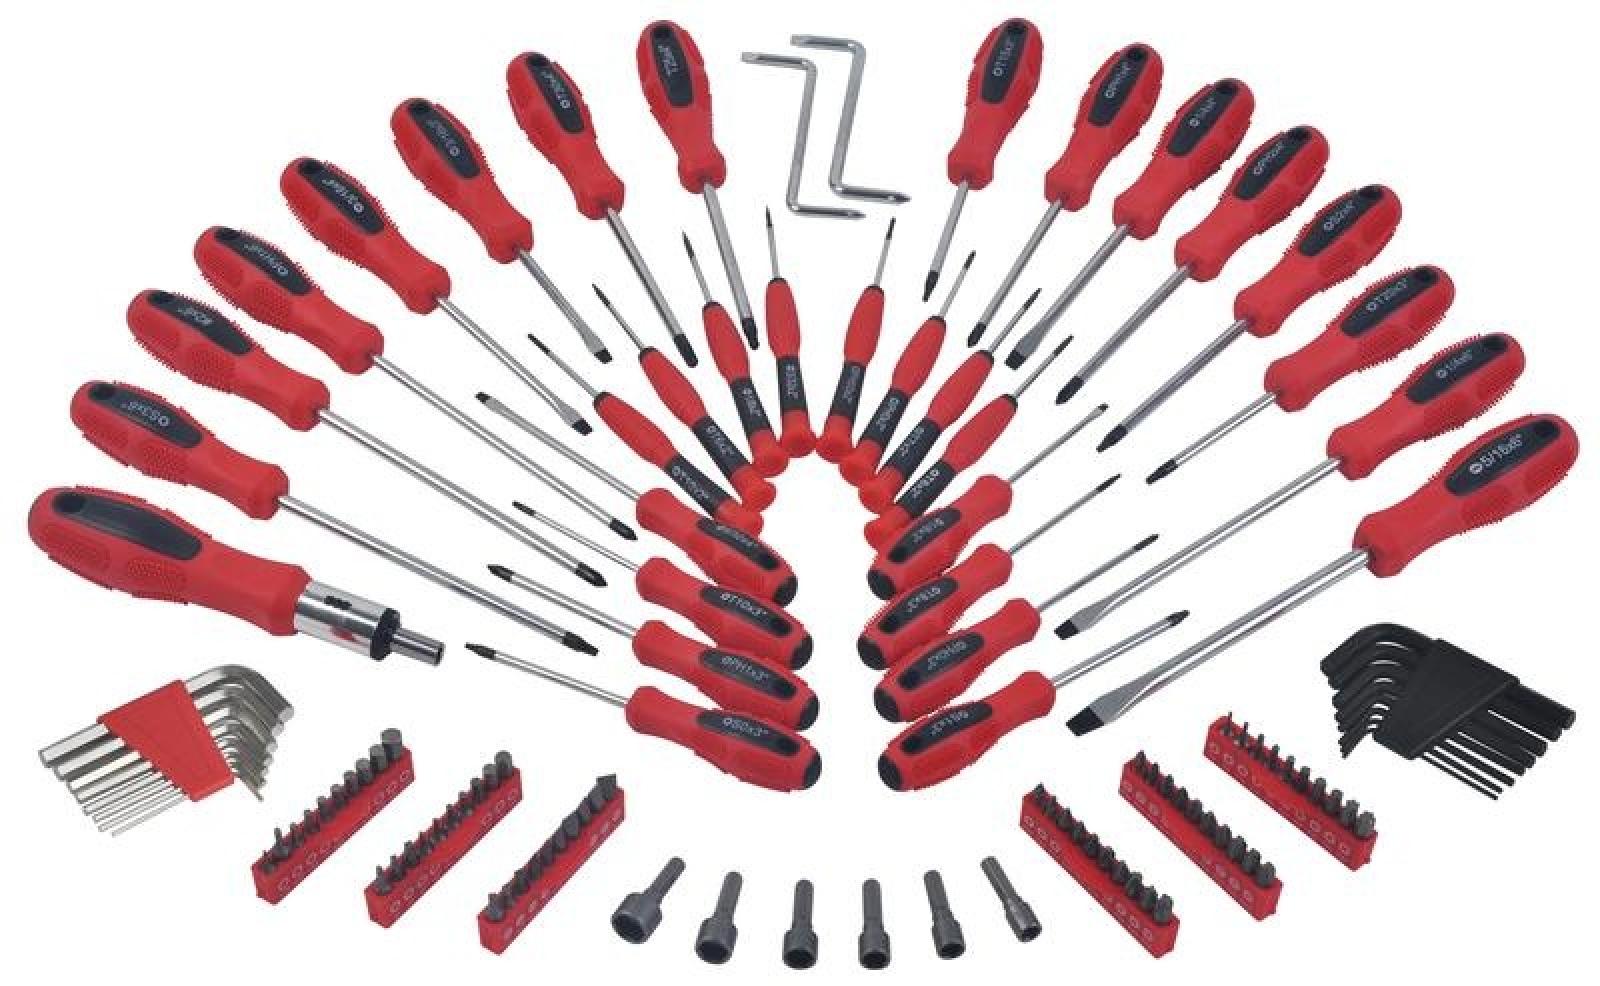 King Tools 116 Piece Screwdriver & Hex Key Set